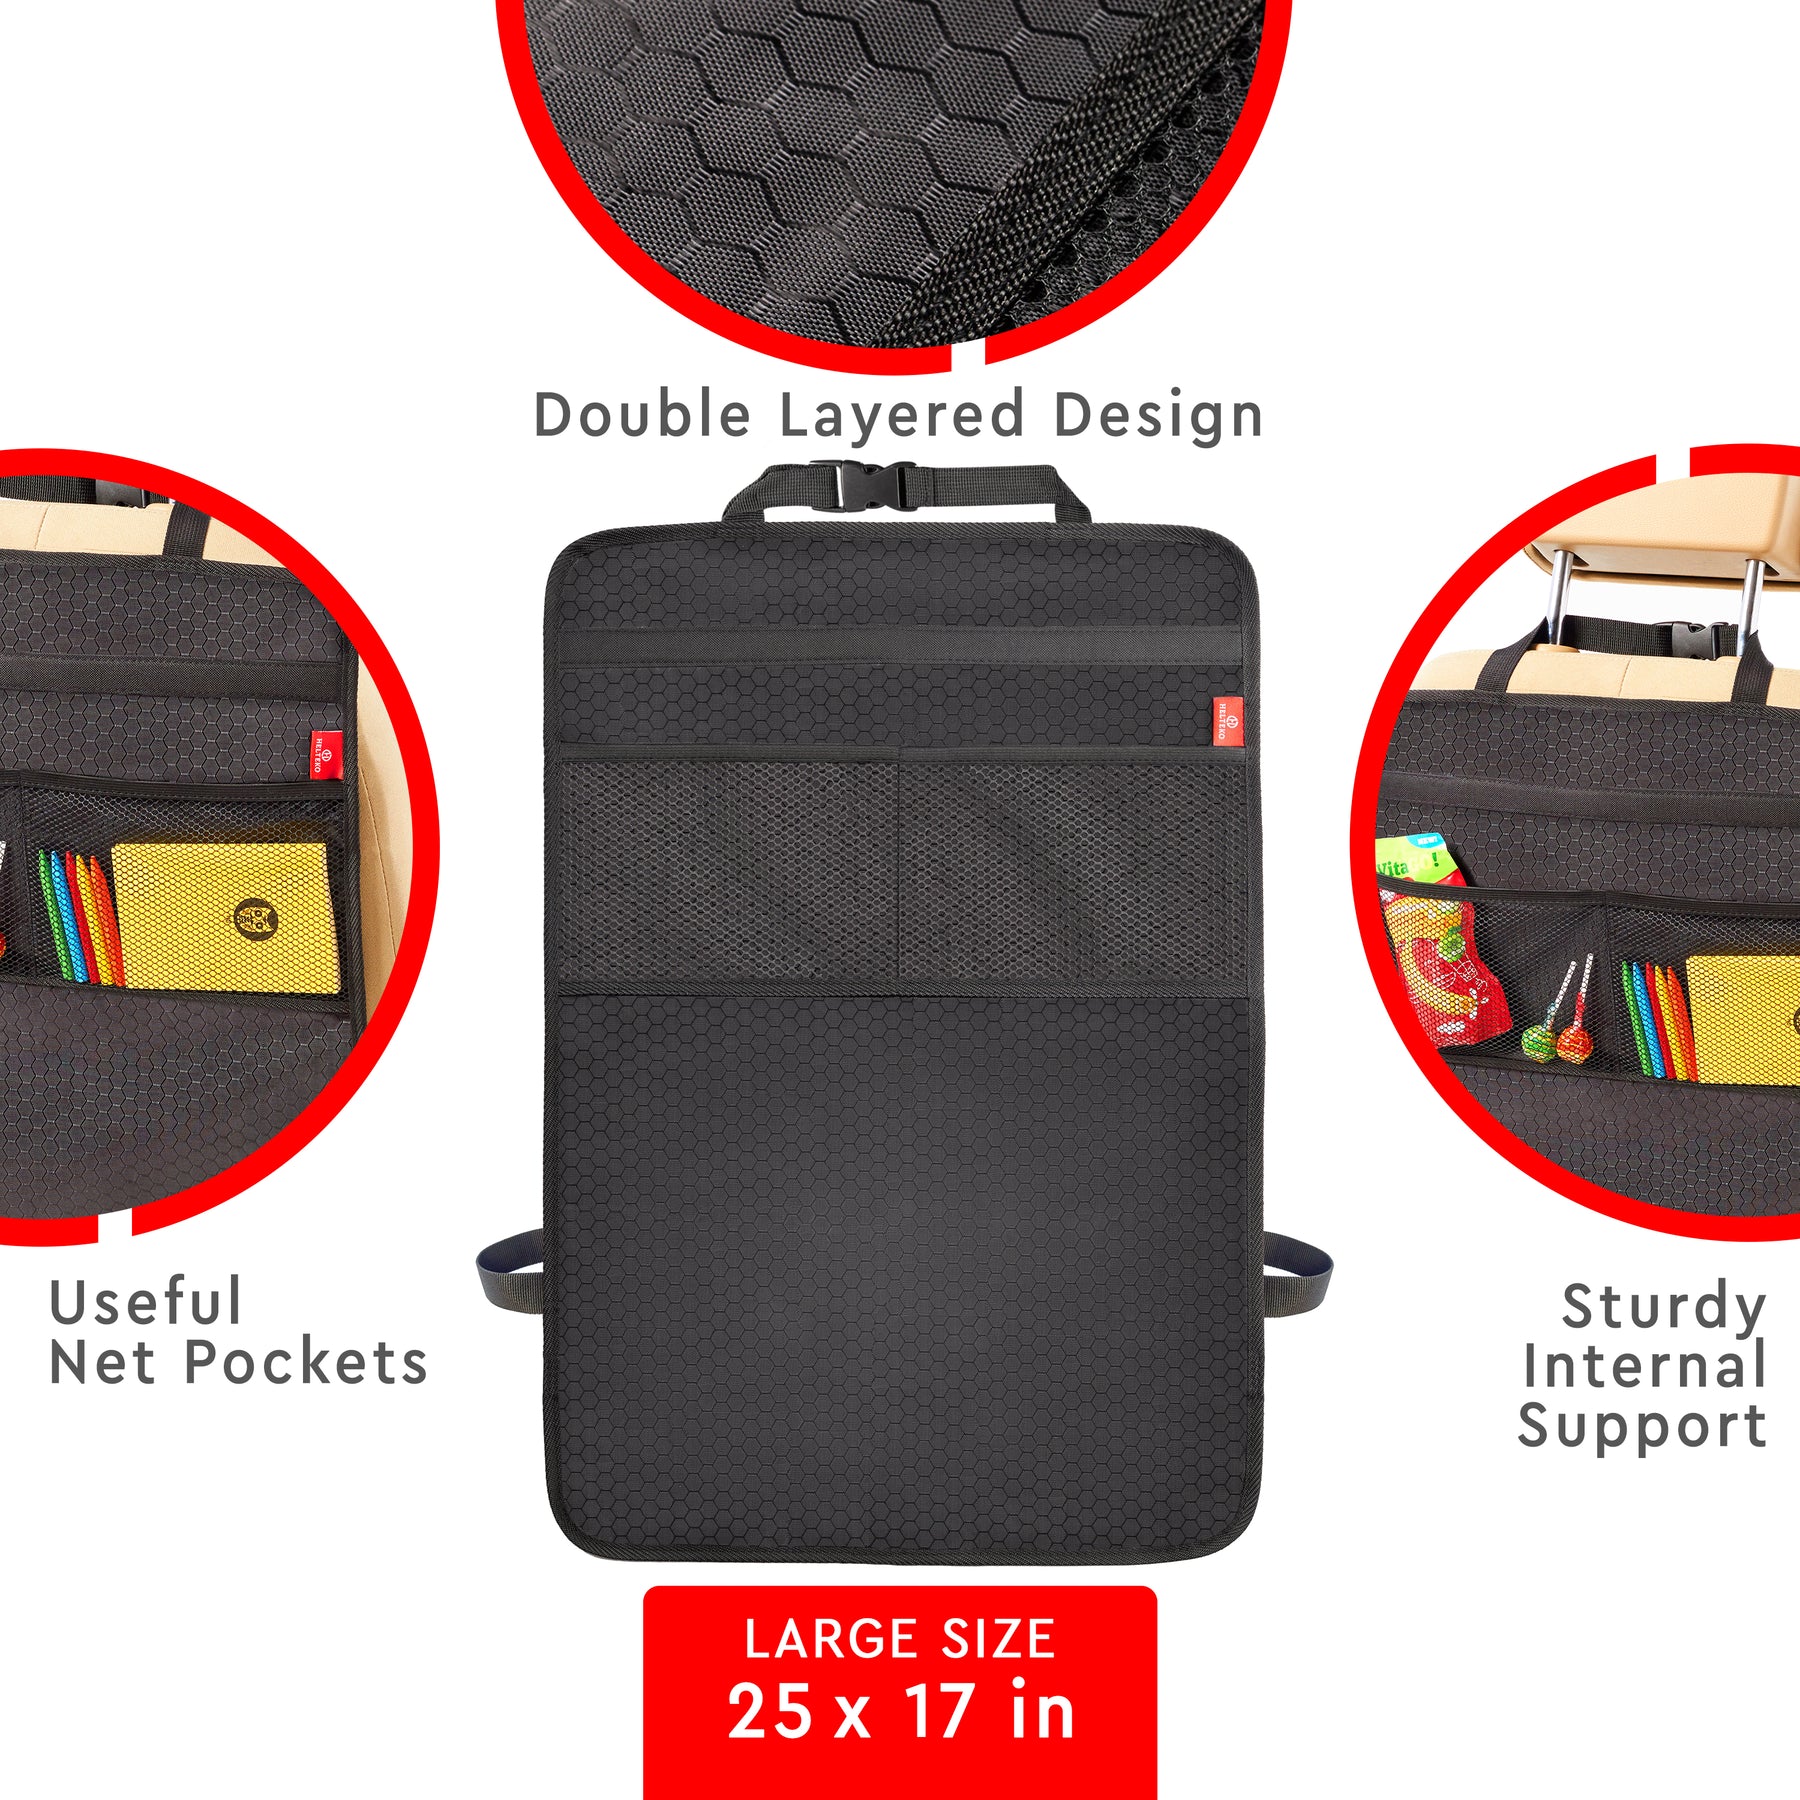 Kick Mat - Seat Back Protector (Black)